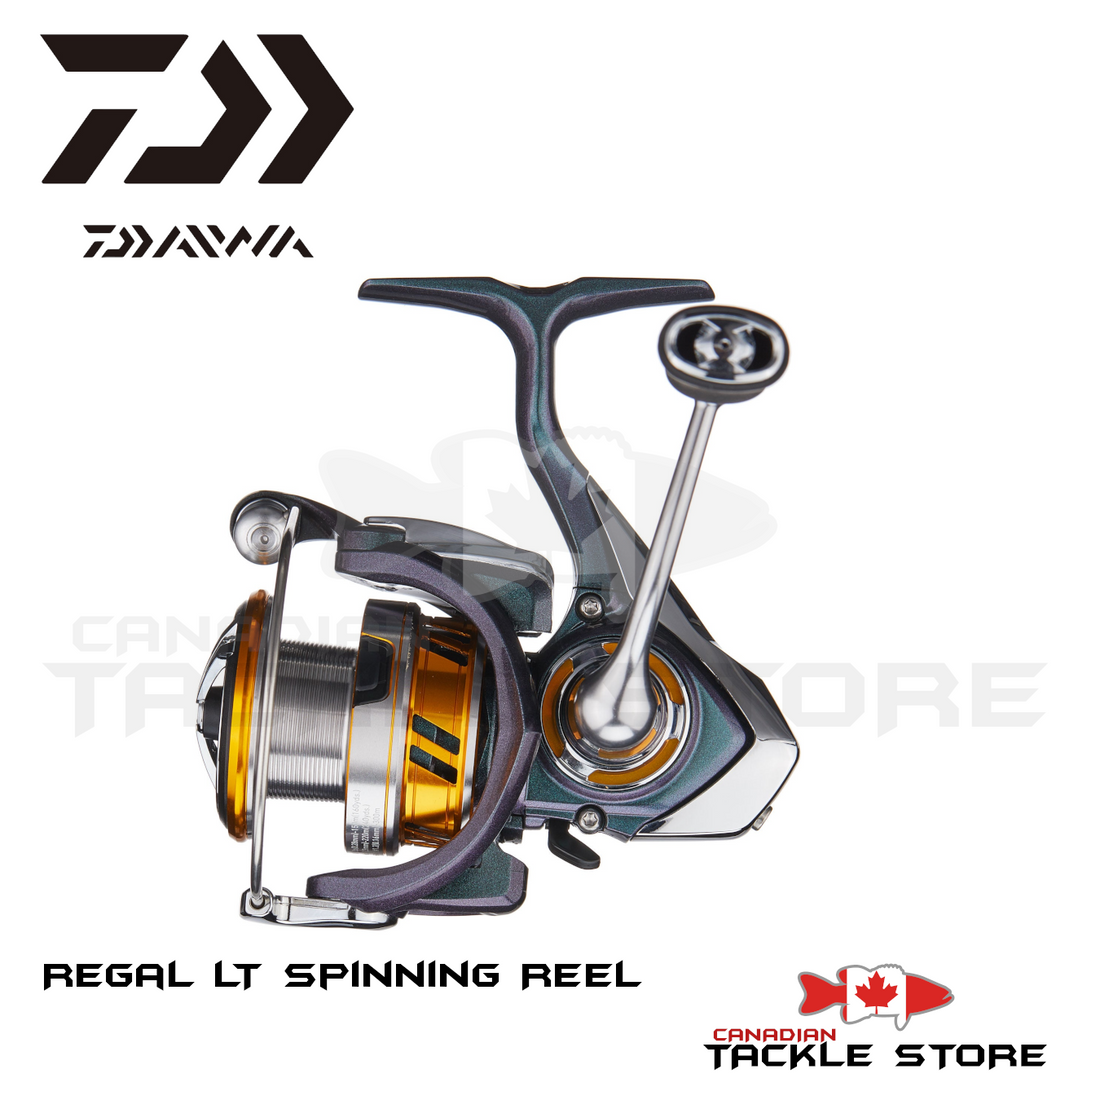 Daiwa Regal LT Spinning Reel